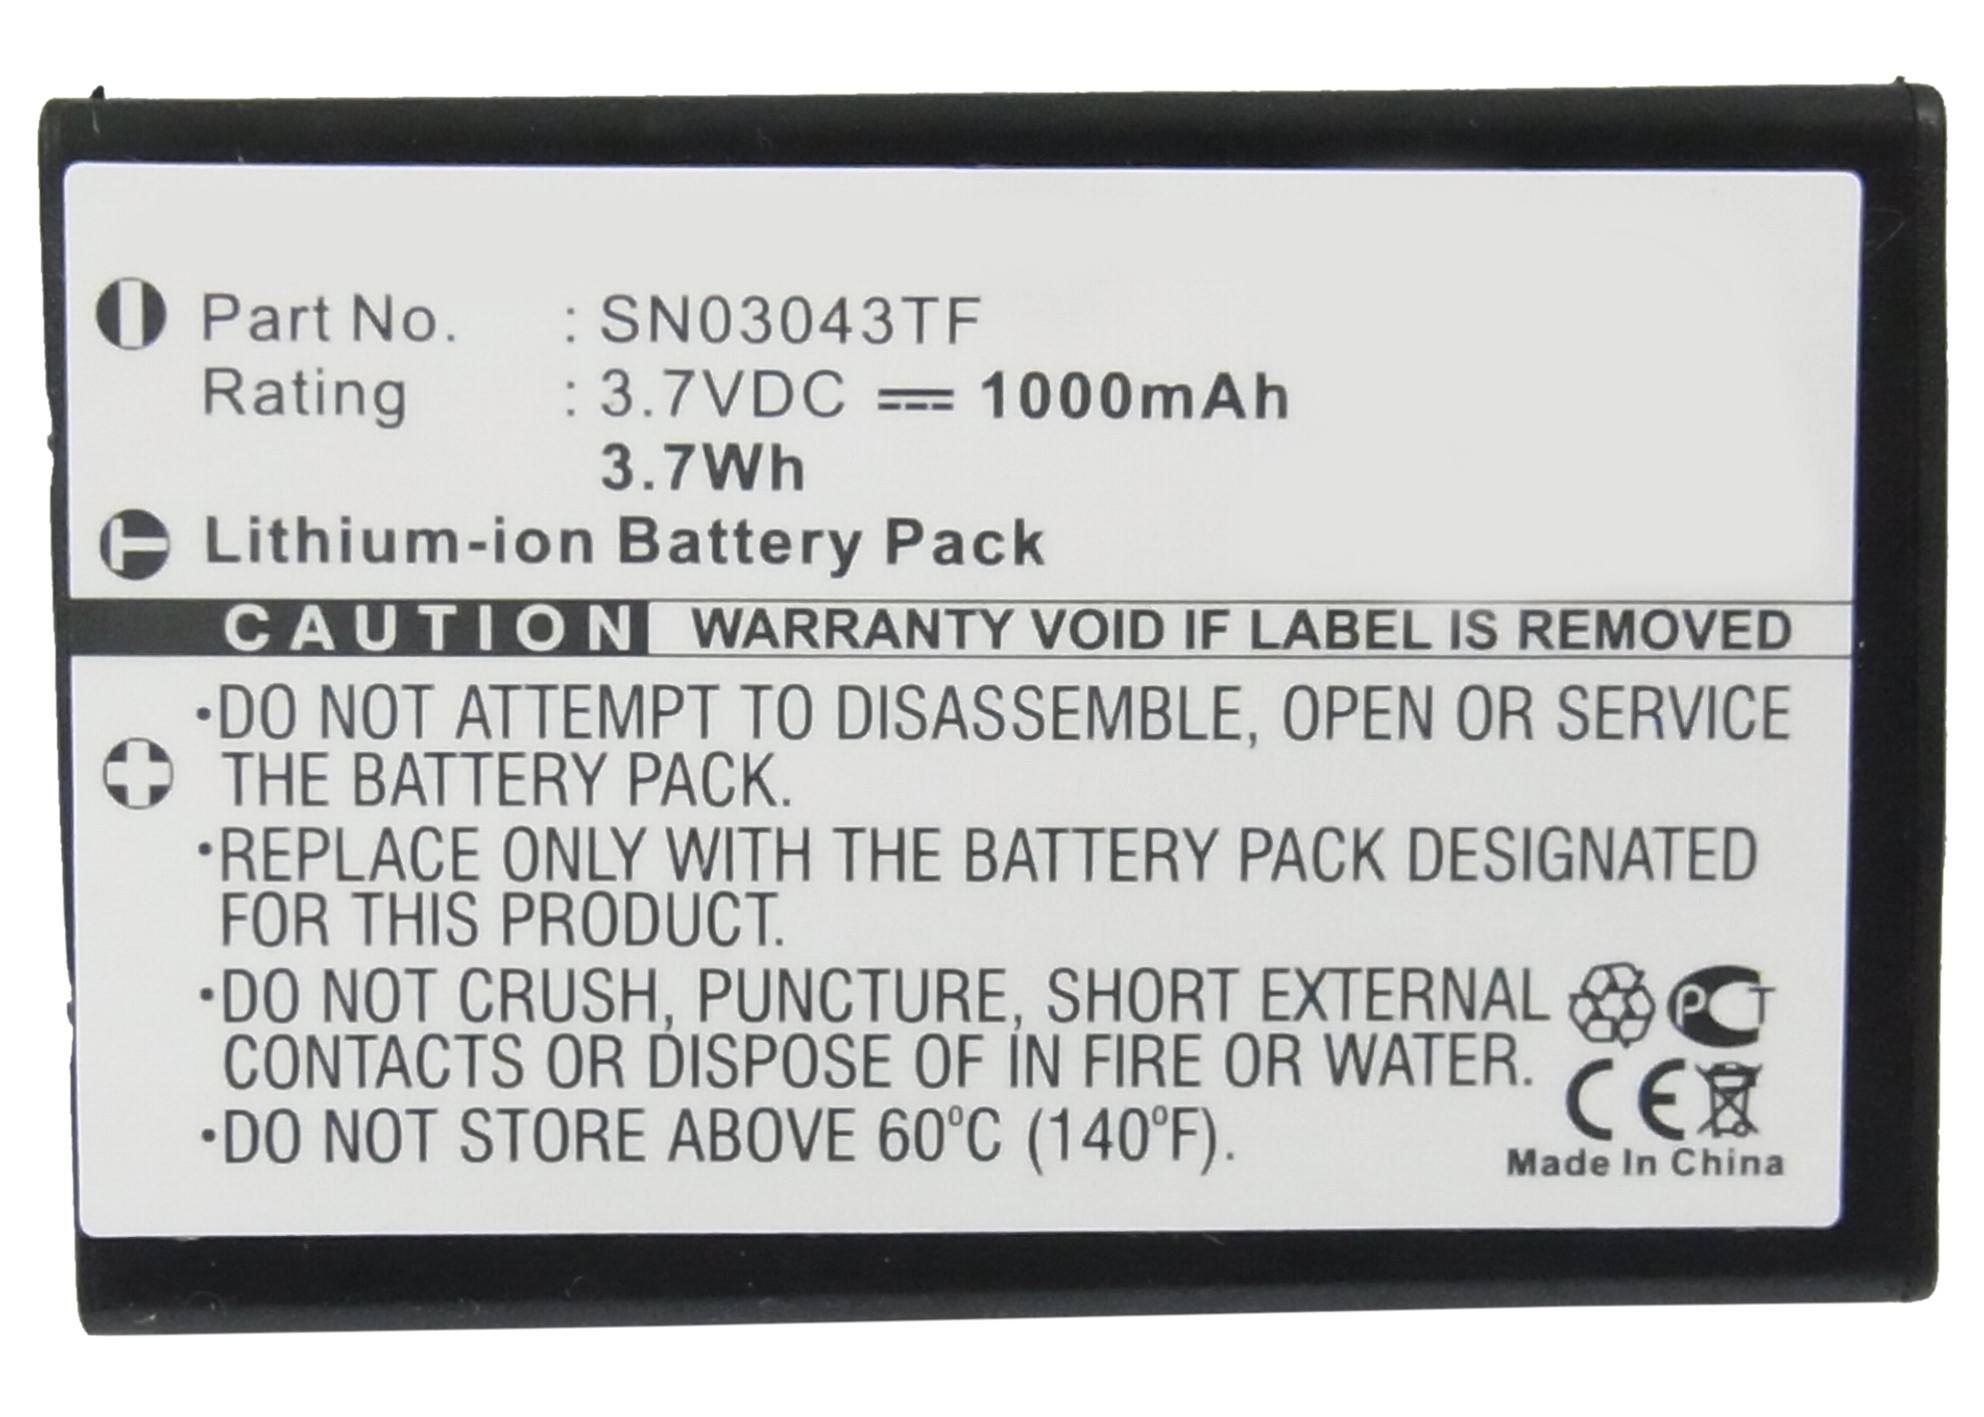 Batteries for NevoRemote Control